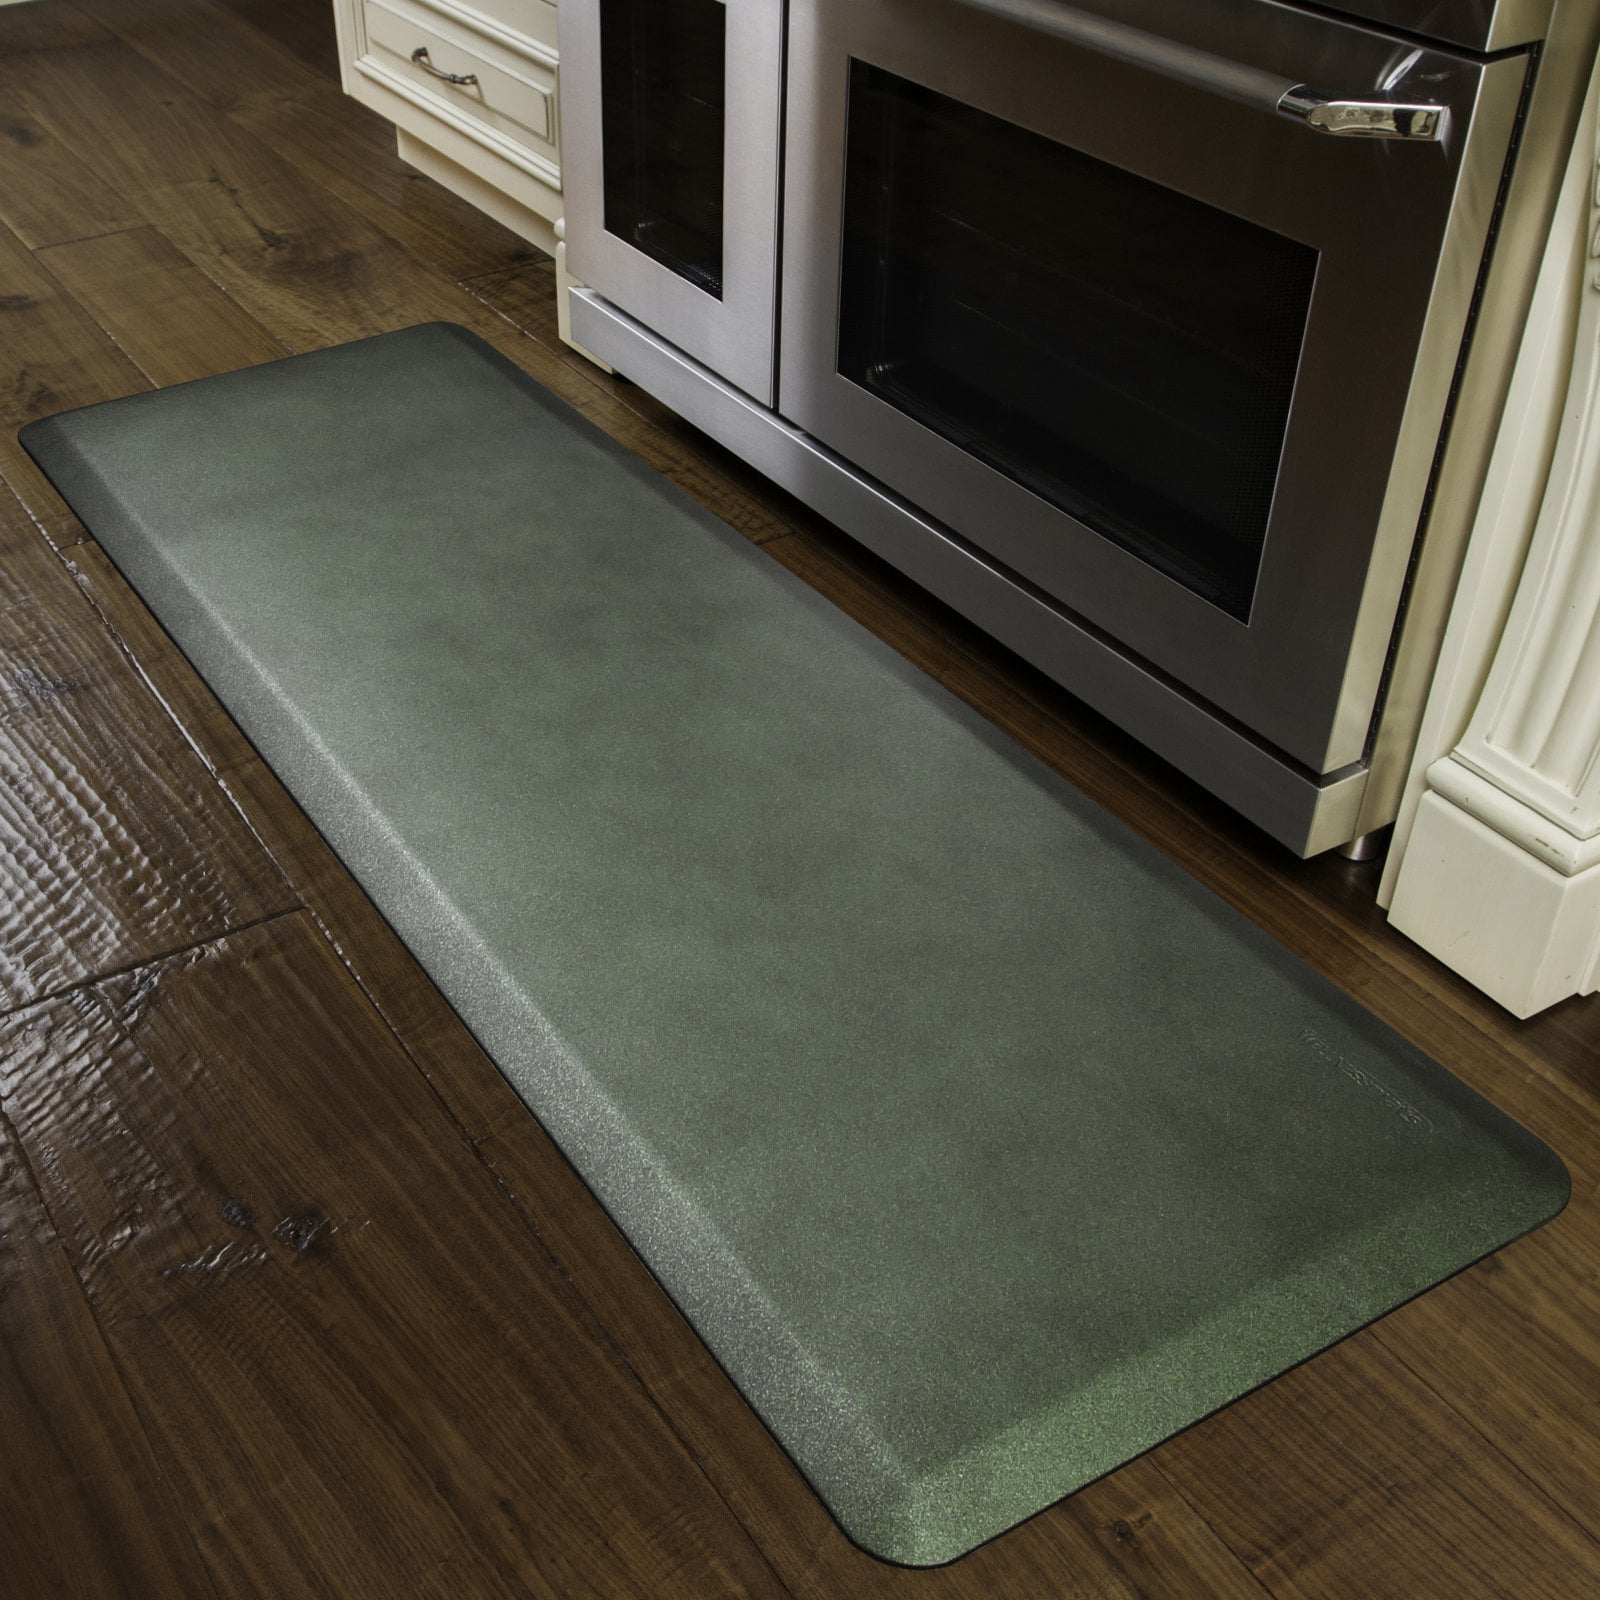 MARBLELIFE® Interior Anti-Wear Floor Mat: 2' x 3